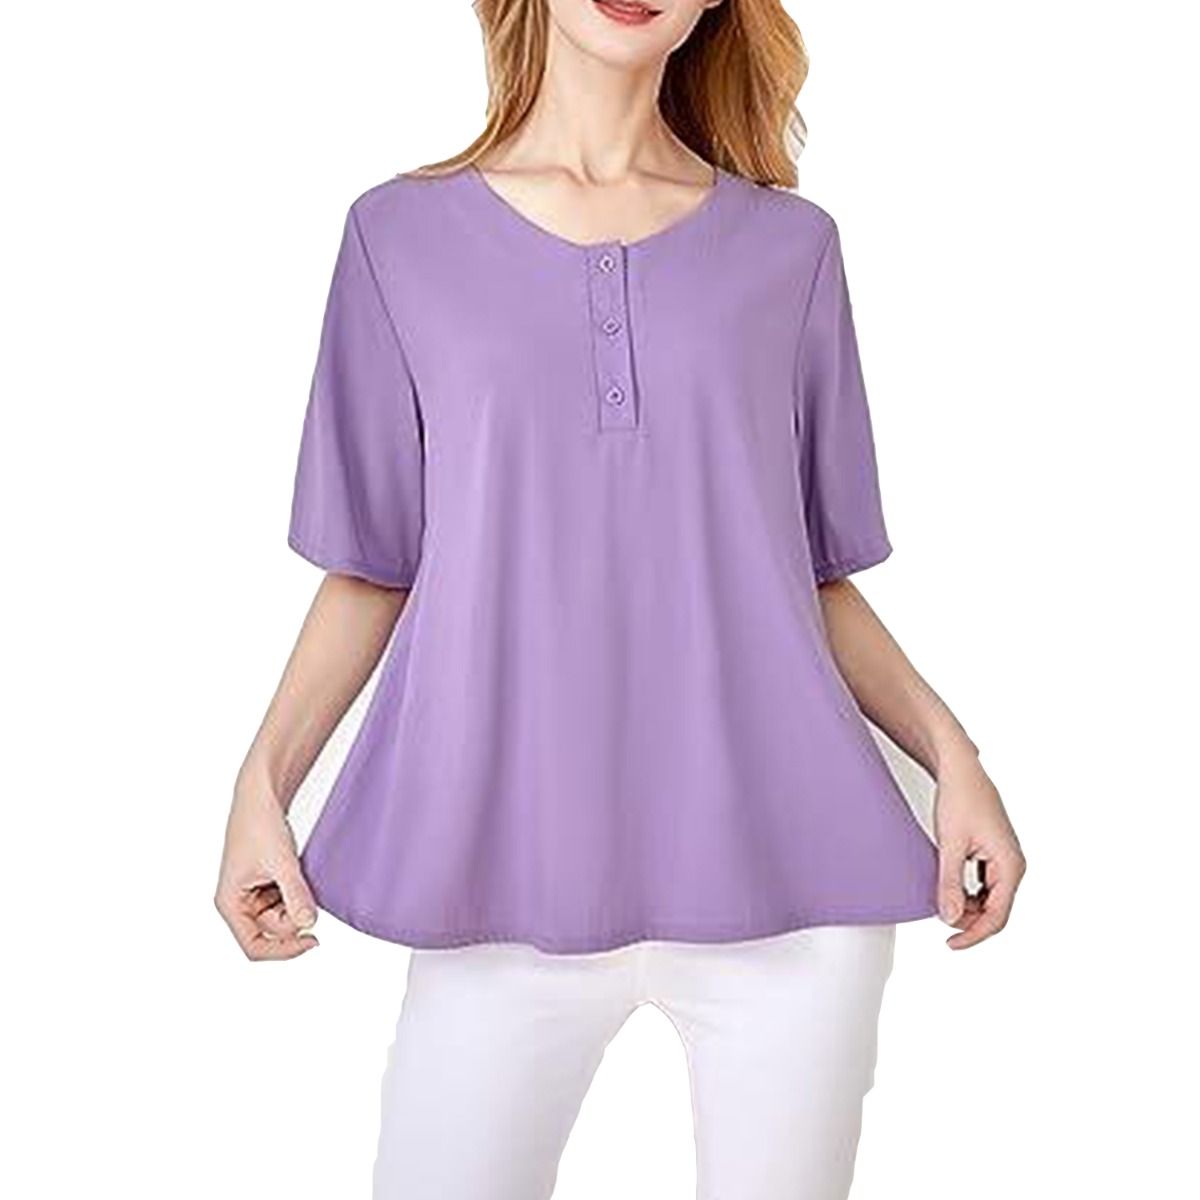 B91xZ Women Plus Size Tops Women Summer Casual Tops Shirt Boho Floral Print  V Neck Chiffon Tops Drawstring Short Sleeve Blouse Plus Size Purple,XXL 